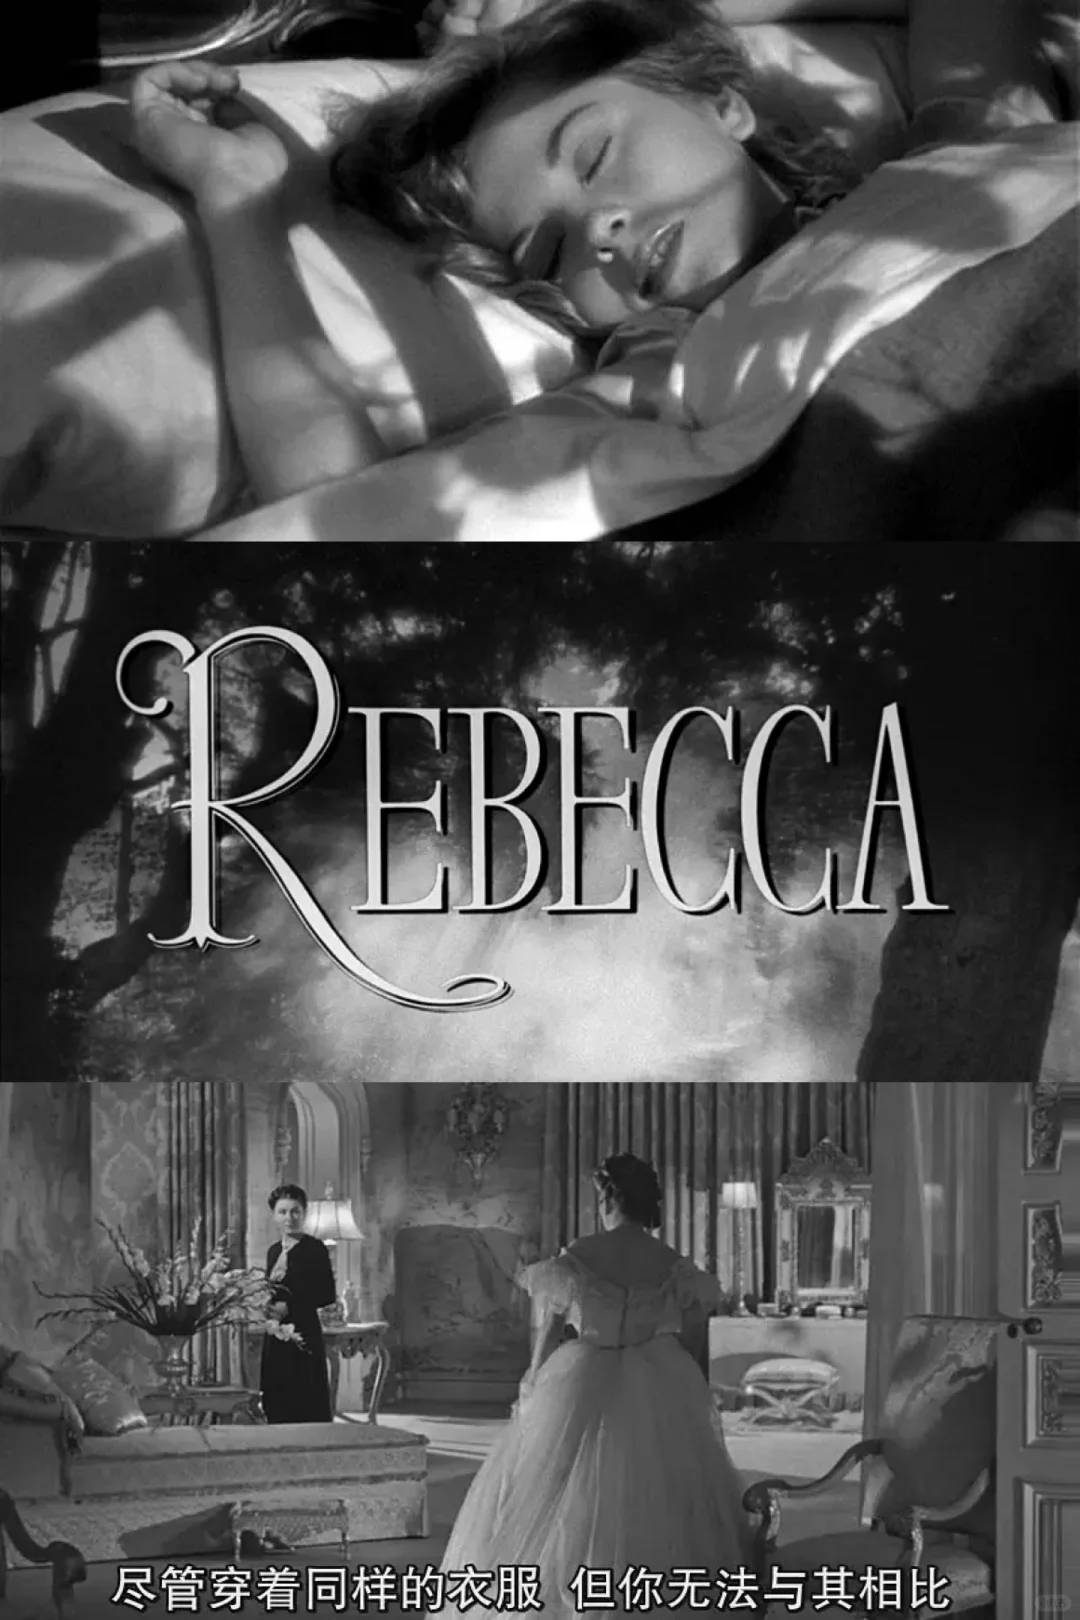 《Rebecca》本来就是一部希区柯克的电影啊！